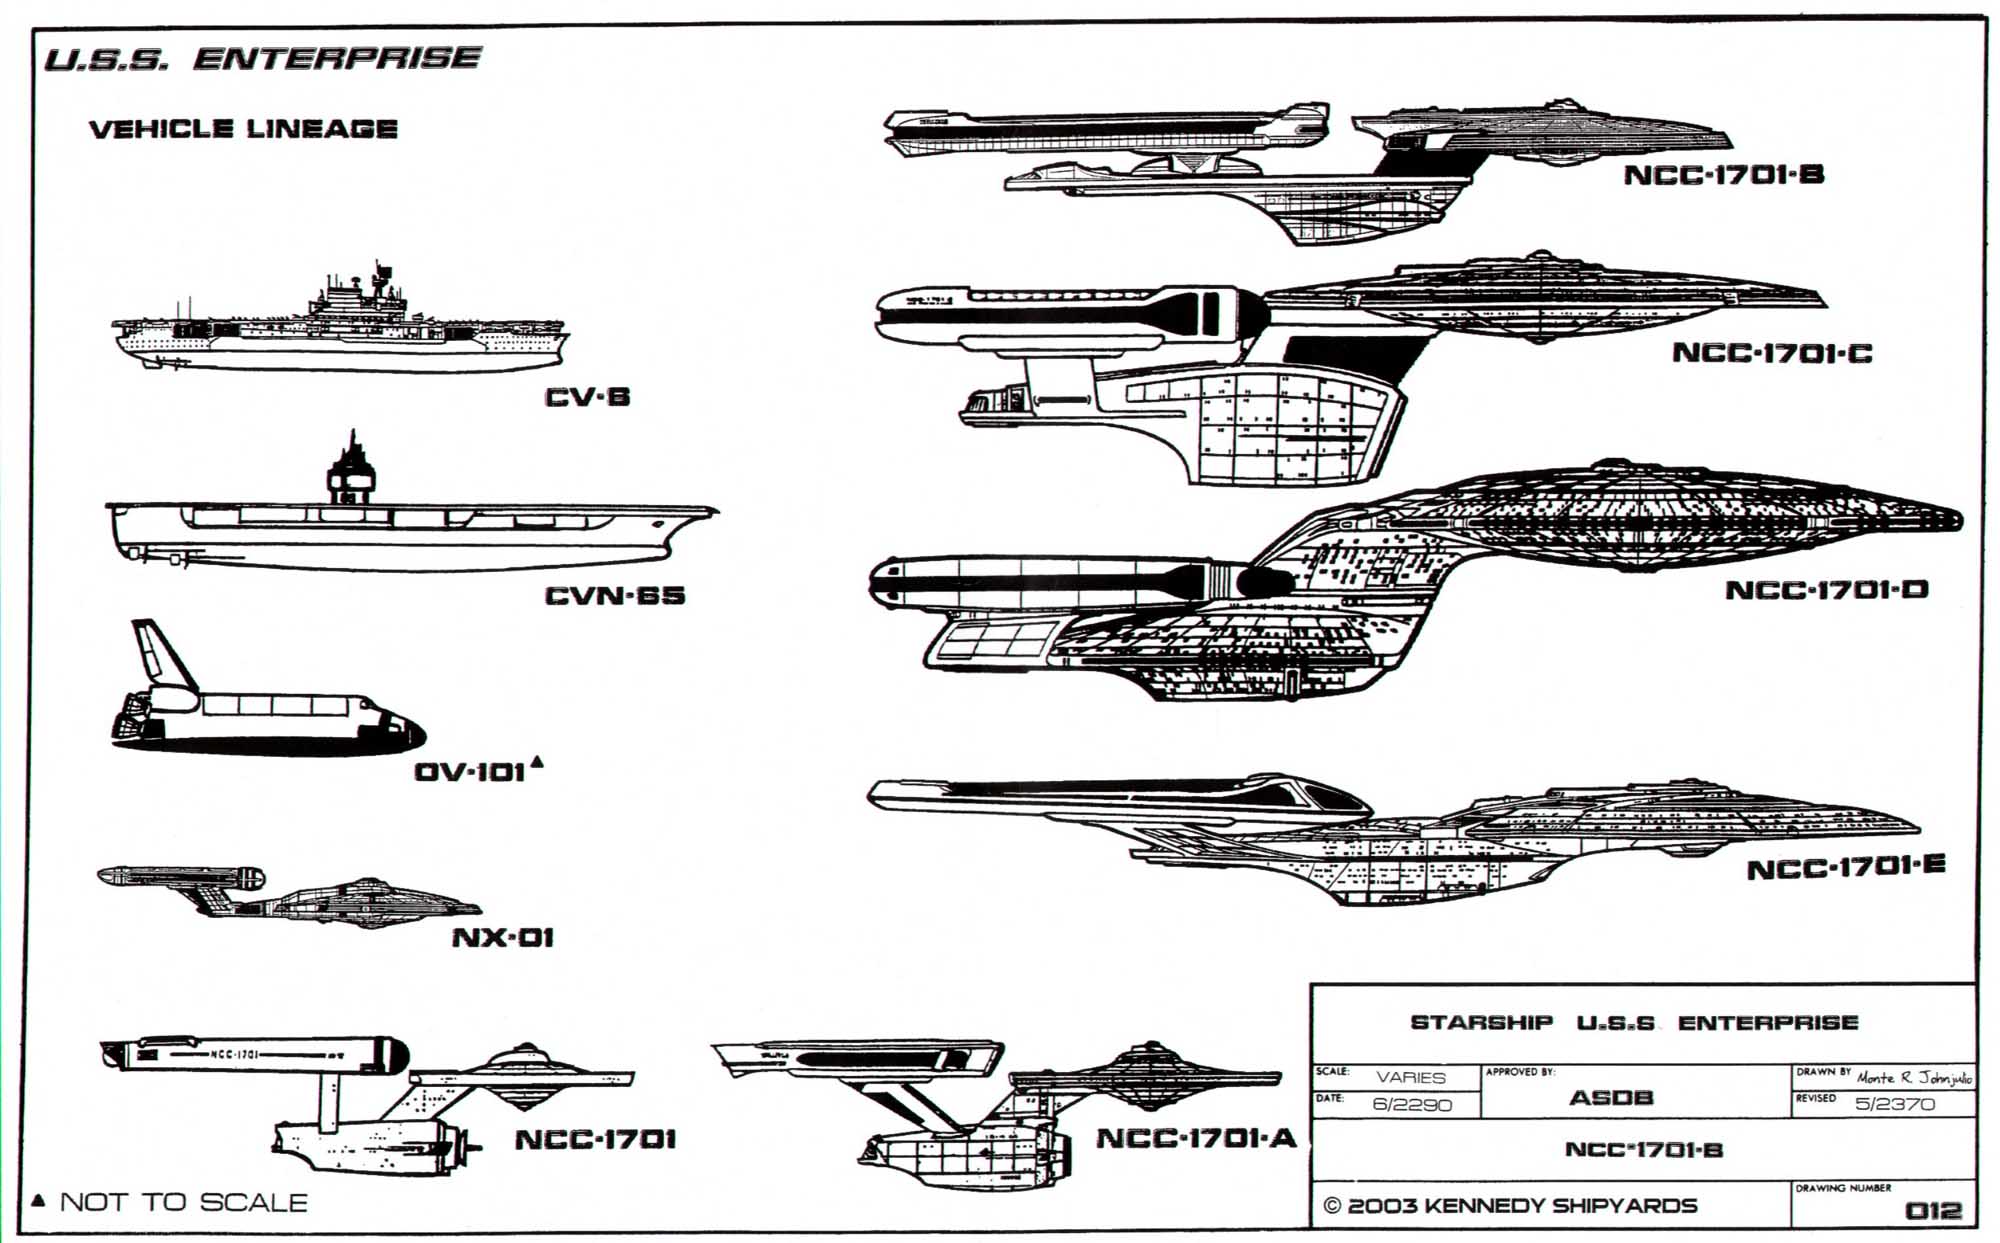 Starfleet Vessel U S S Enterprise Ncc 1701 B General Blueprints And Specifications